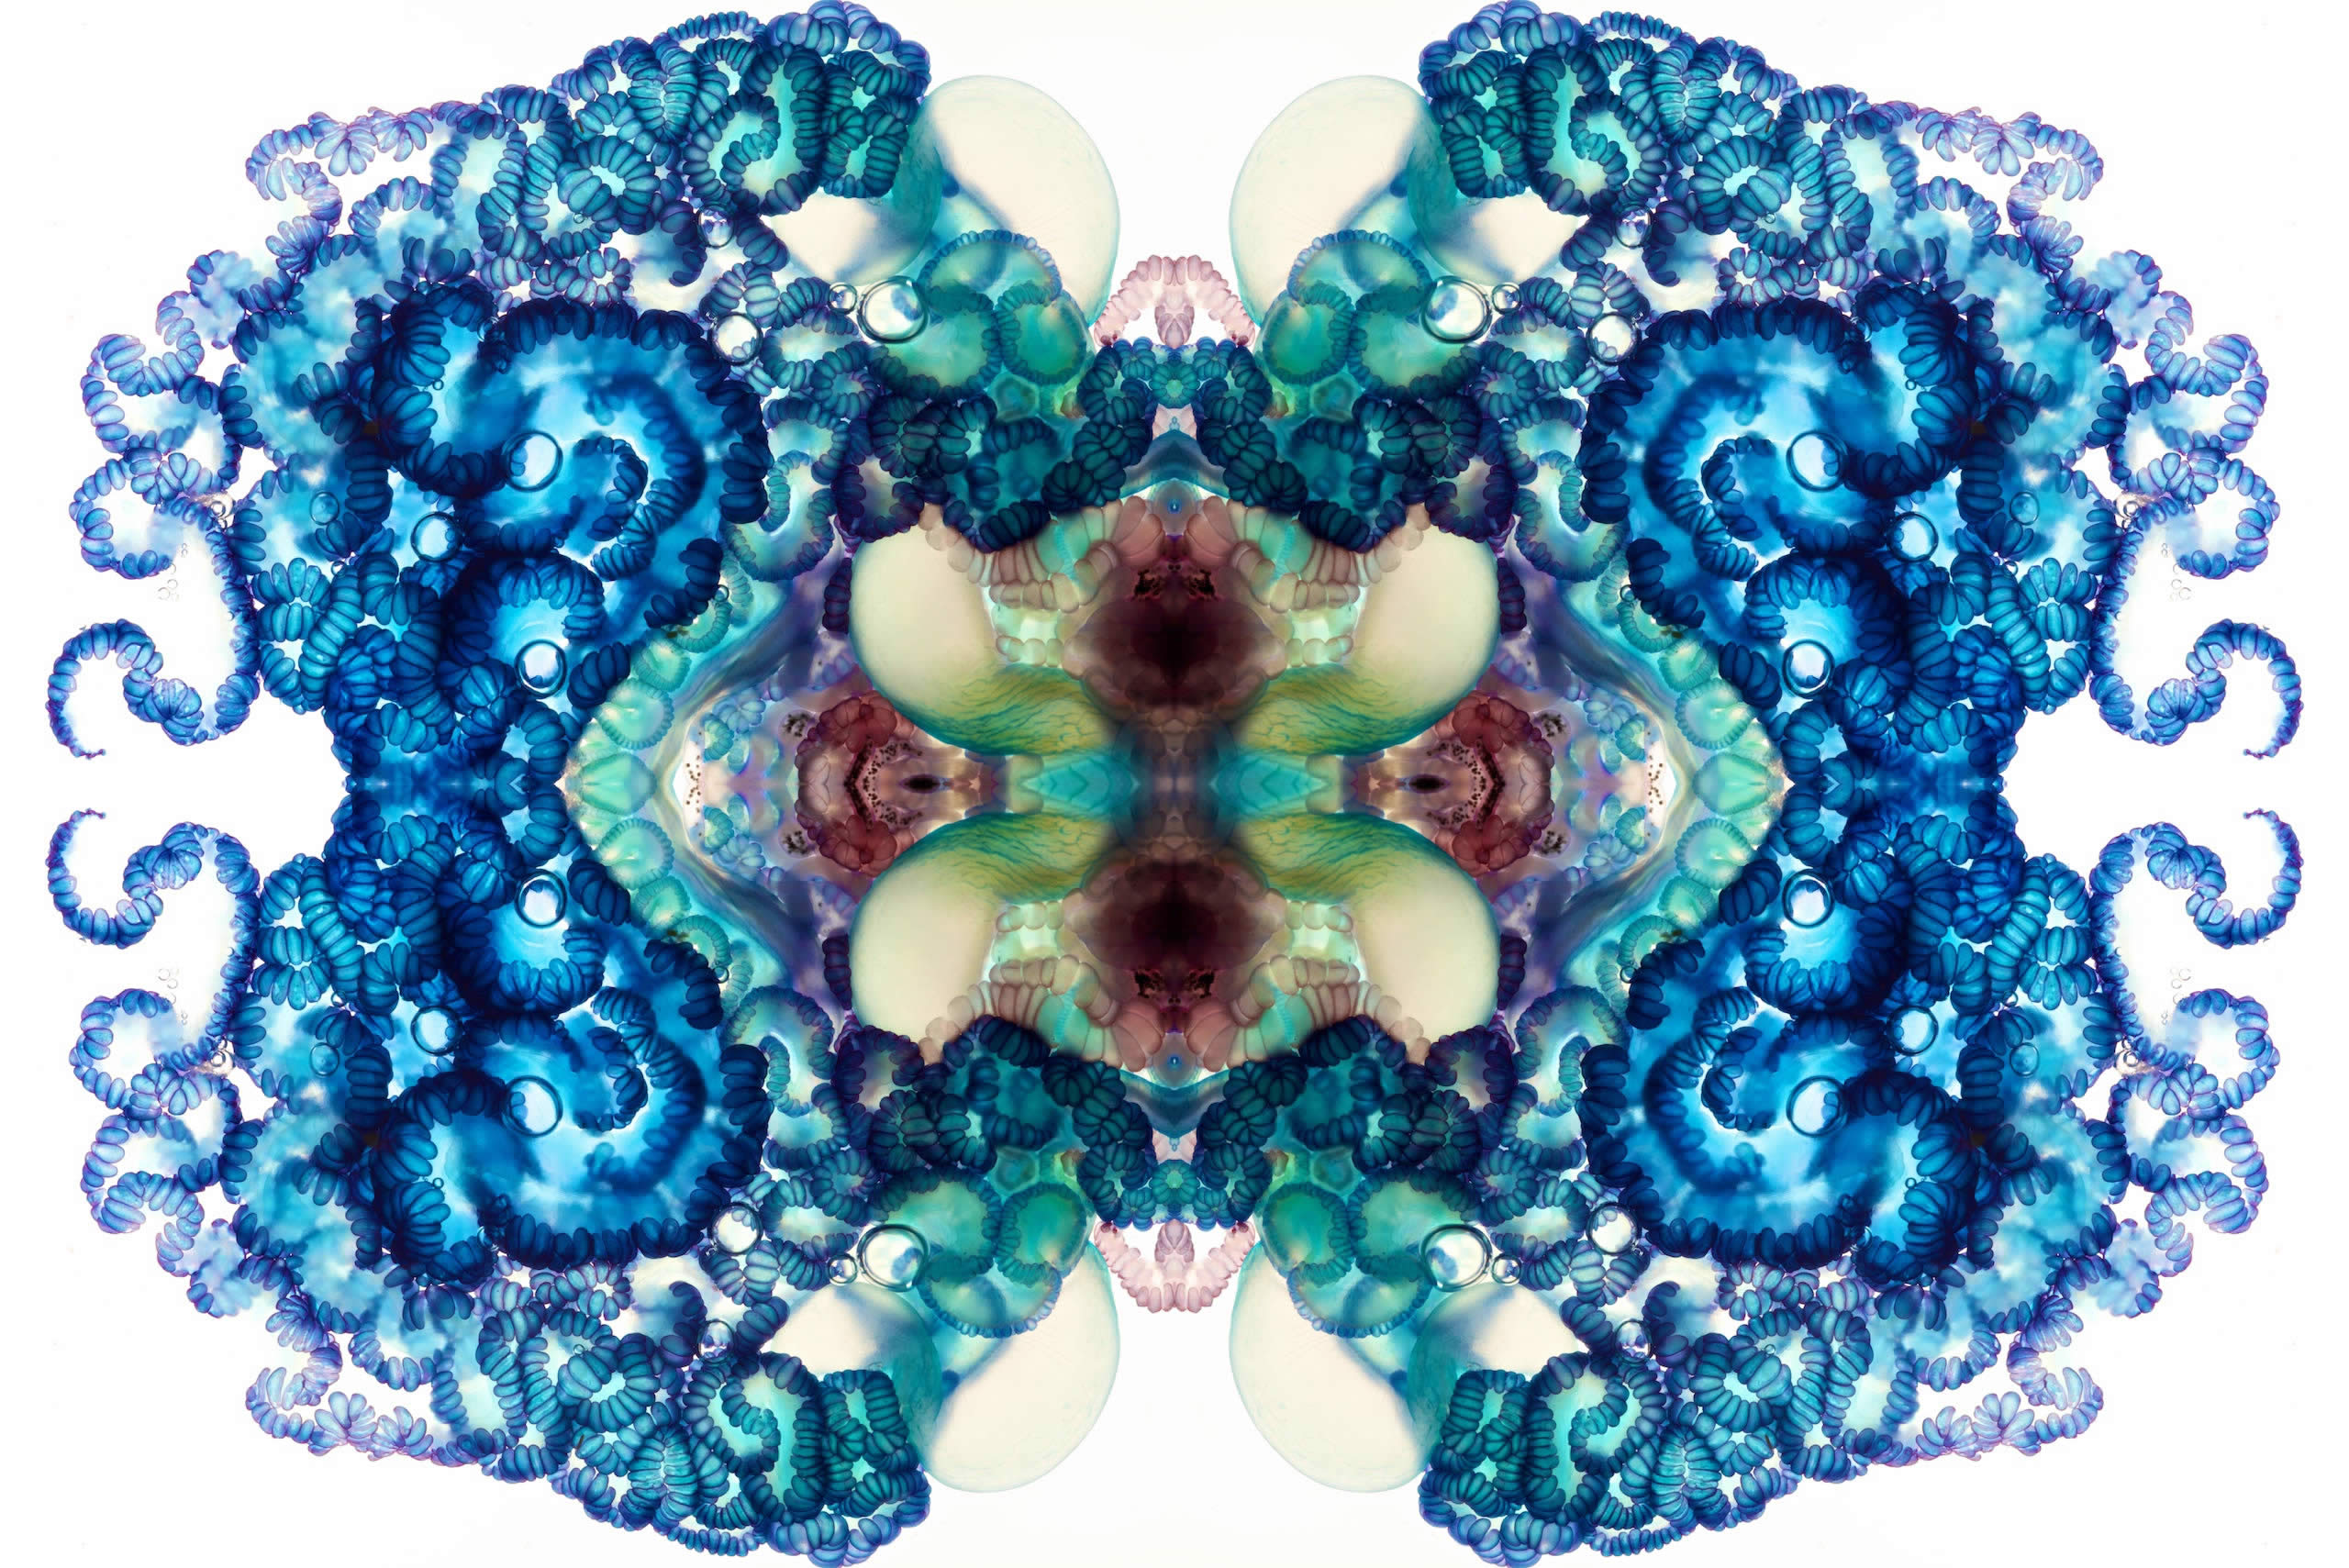 rorschach test style jellyfish by Aaron Ansarov